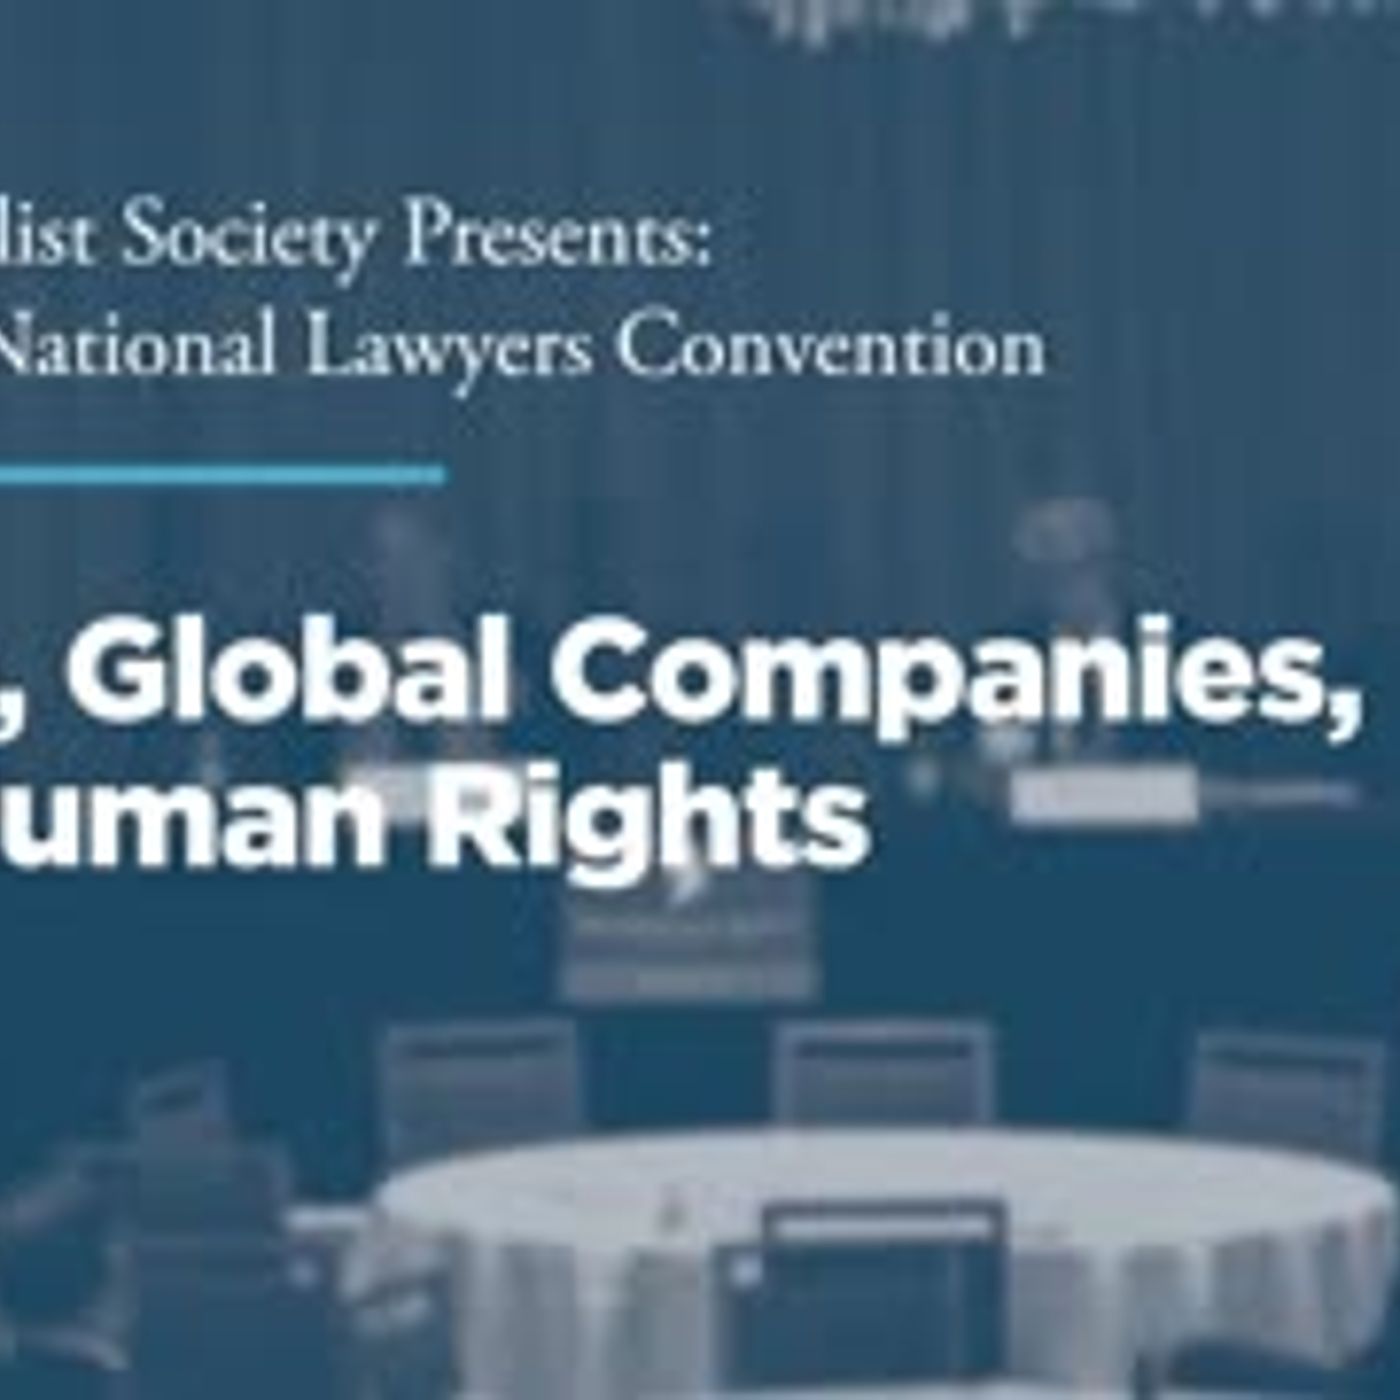 China, Global Companies, and Human Rights